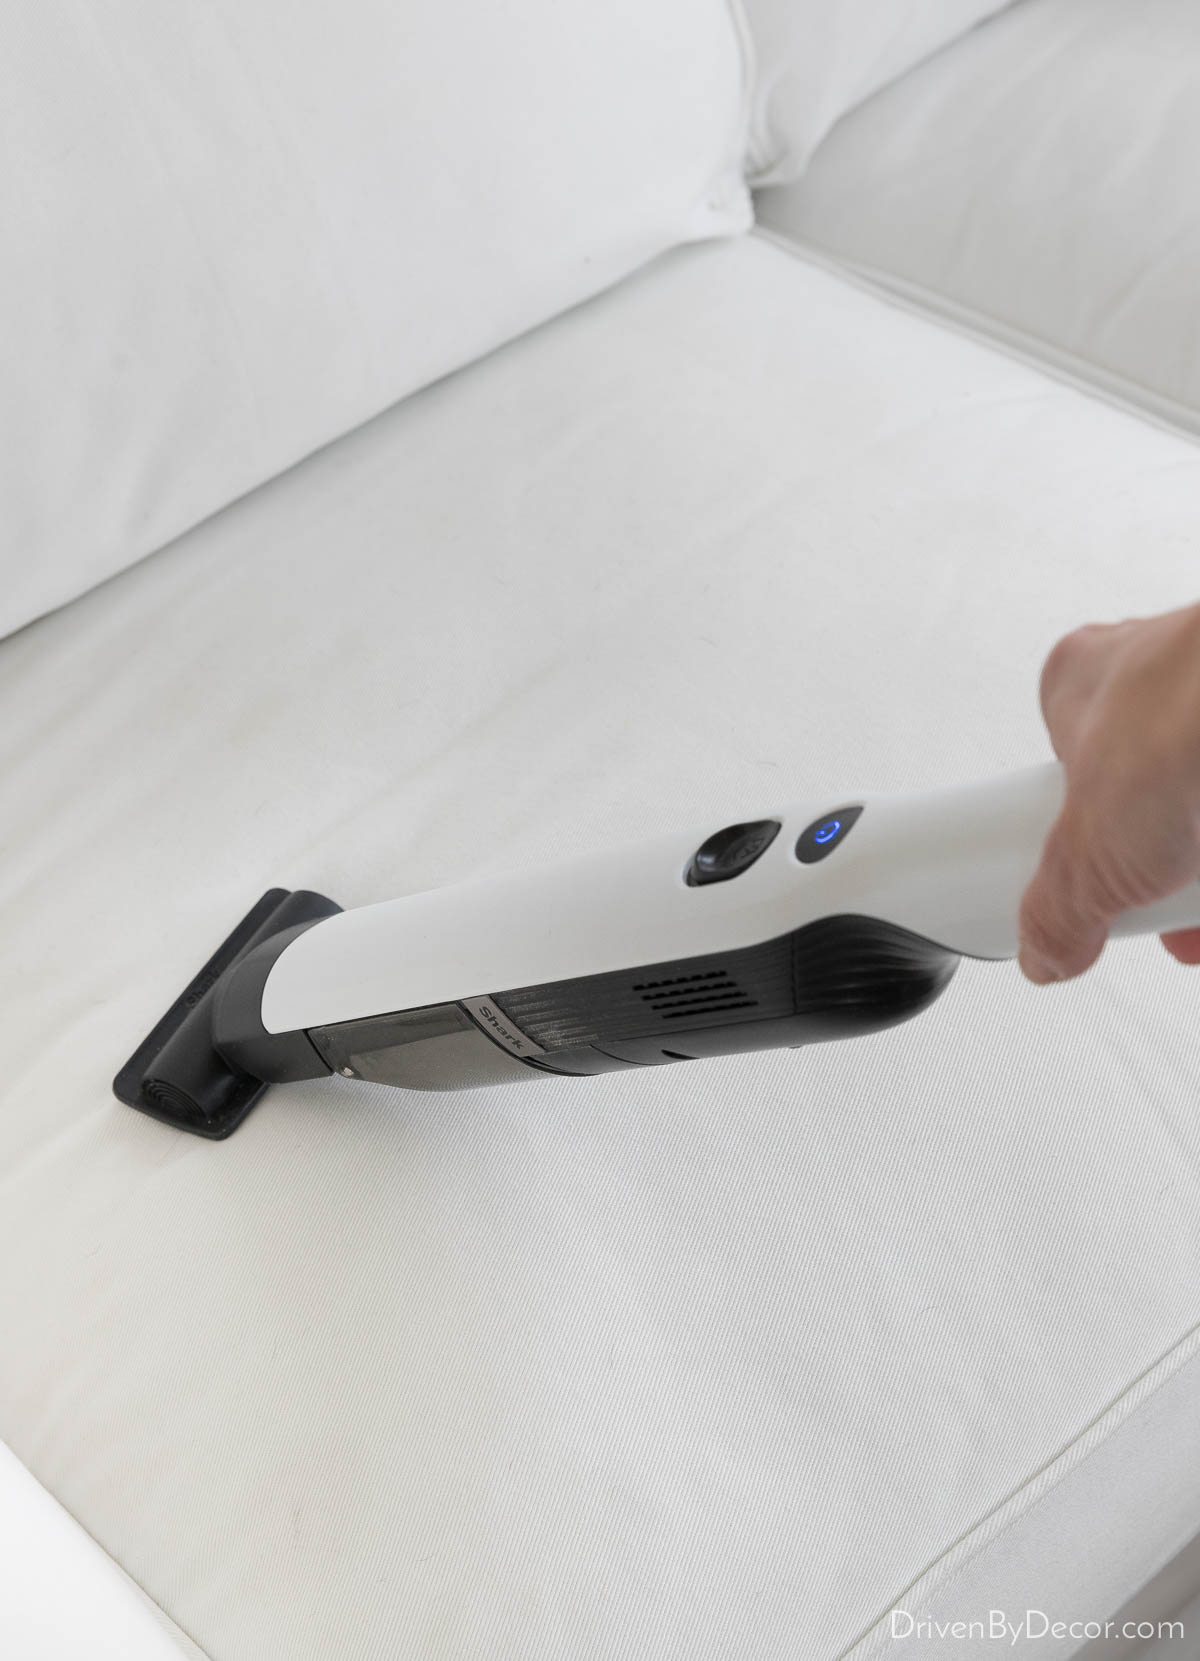 Favorite cleaning tools - handheld vacuum to clean upholstery